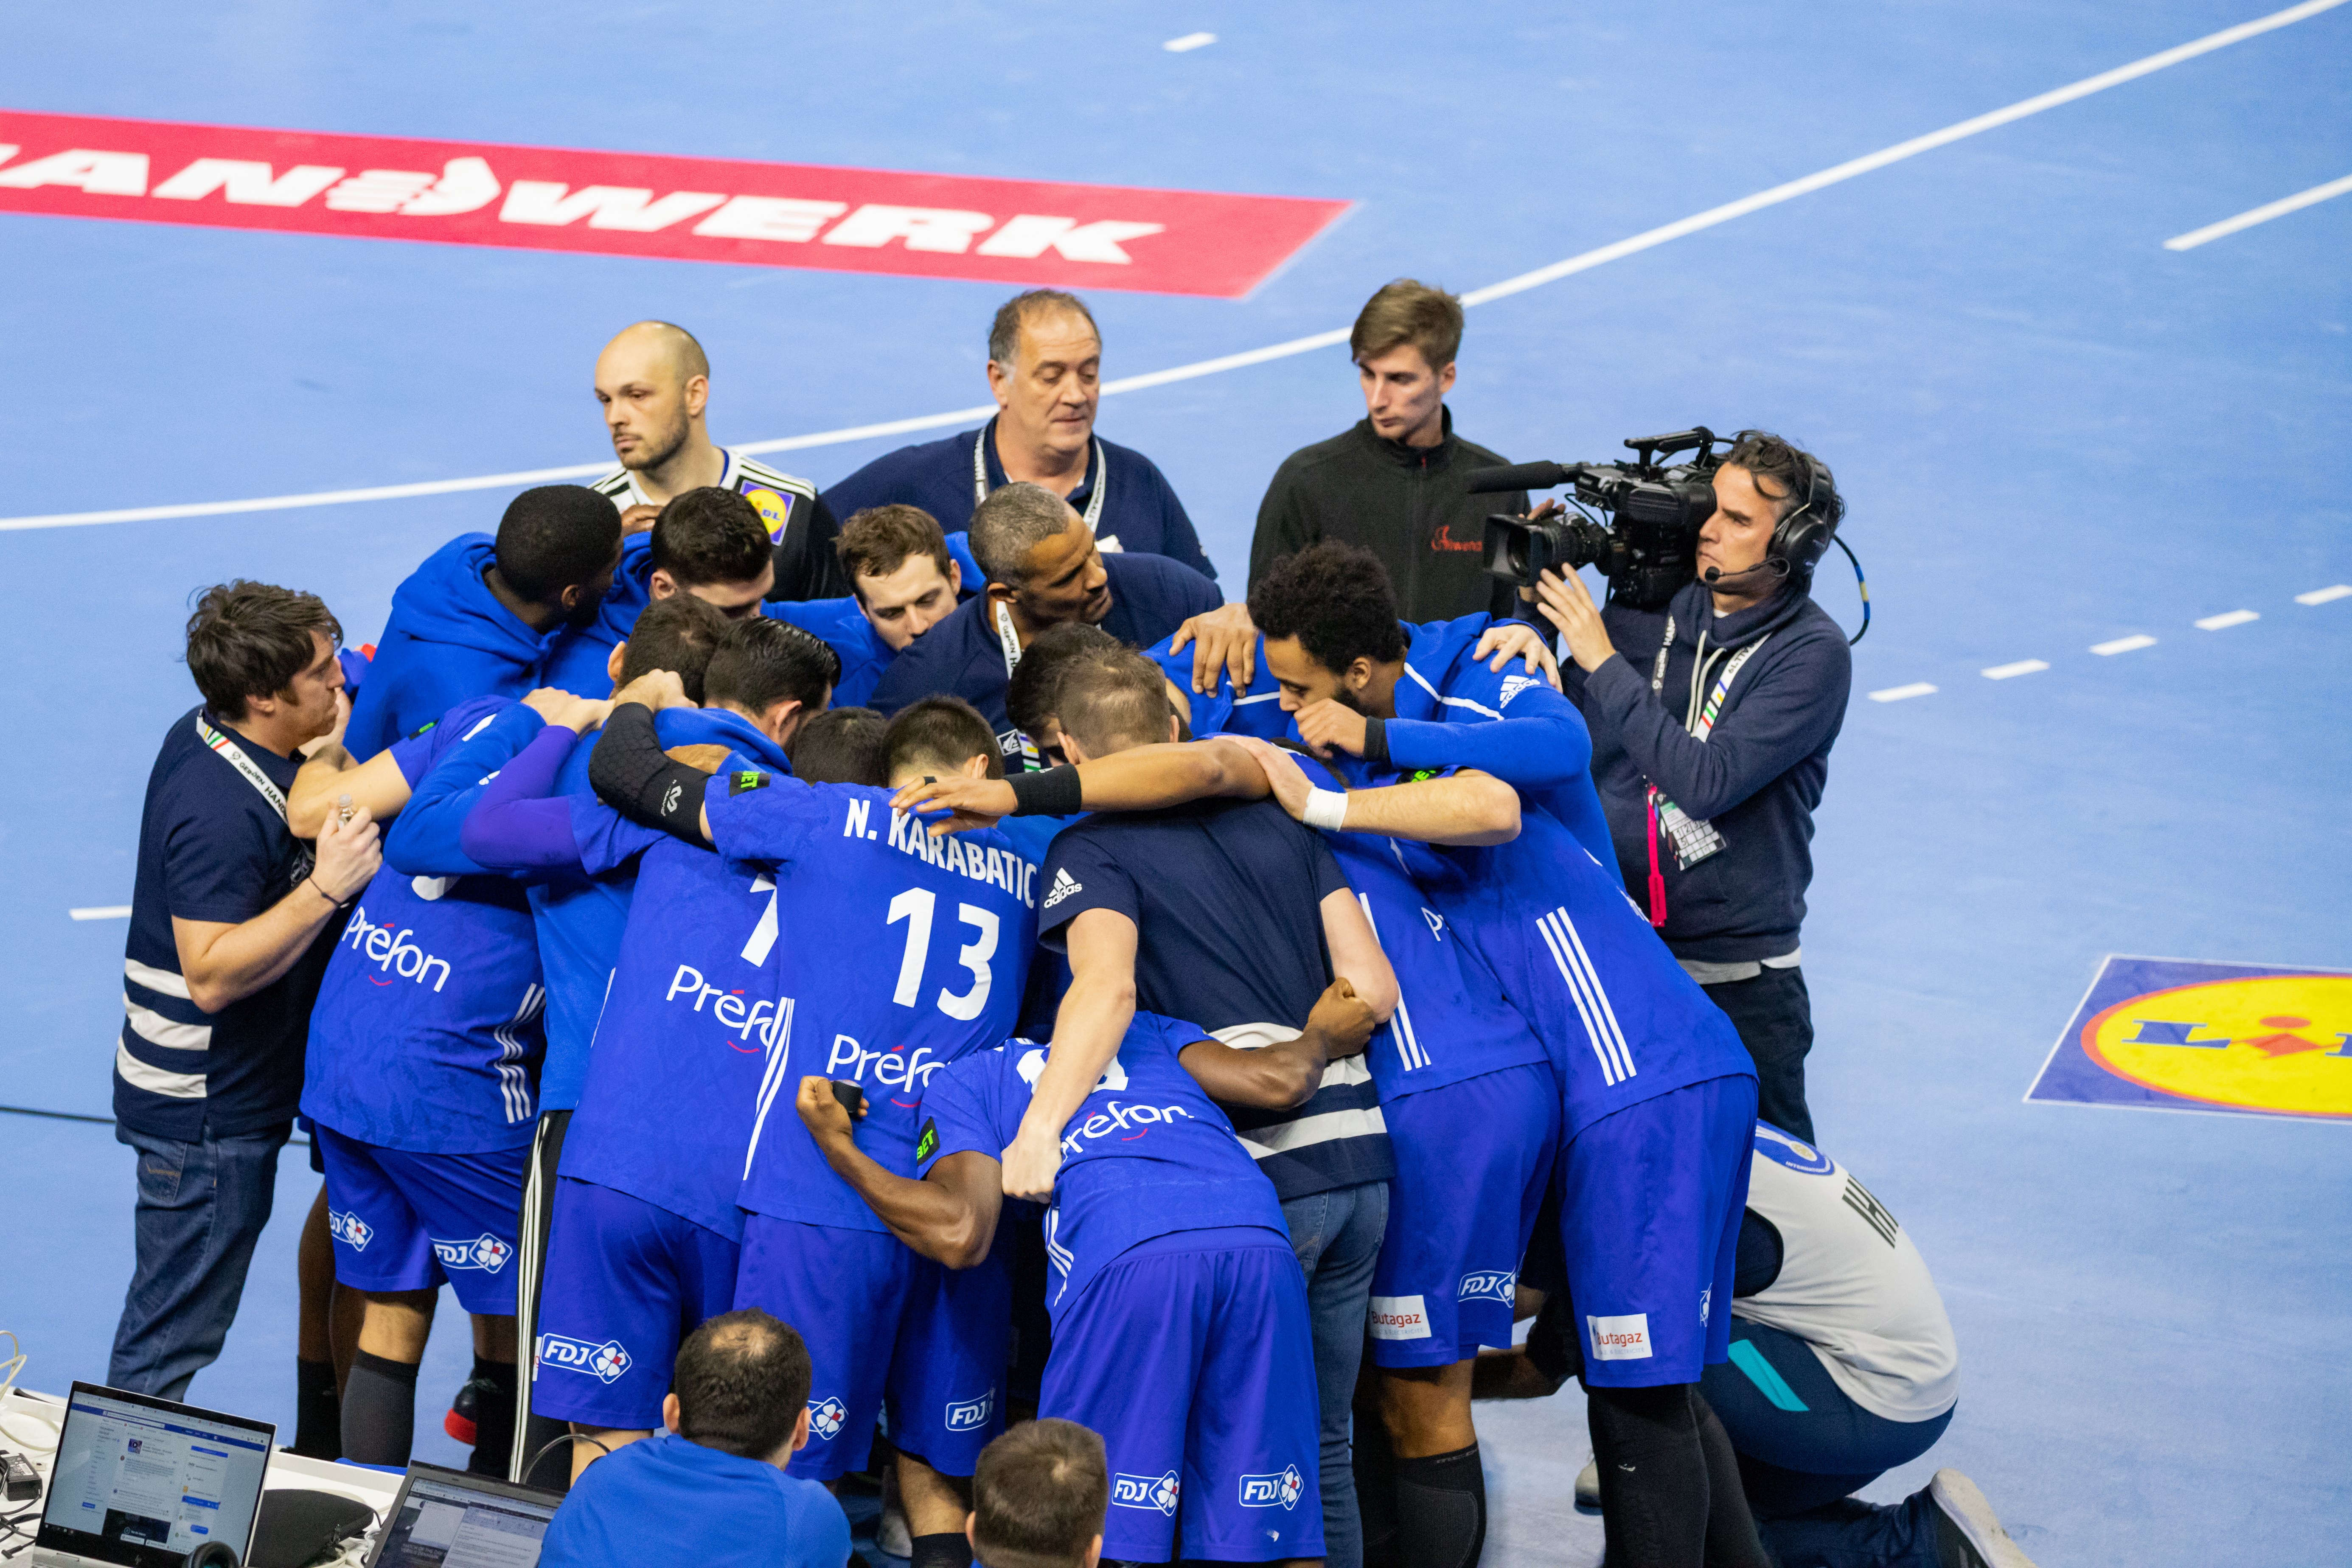 File:Team France Handball Handball World Championship (47875743071).jpg - Wikimedia Commons